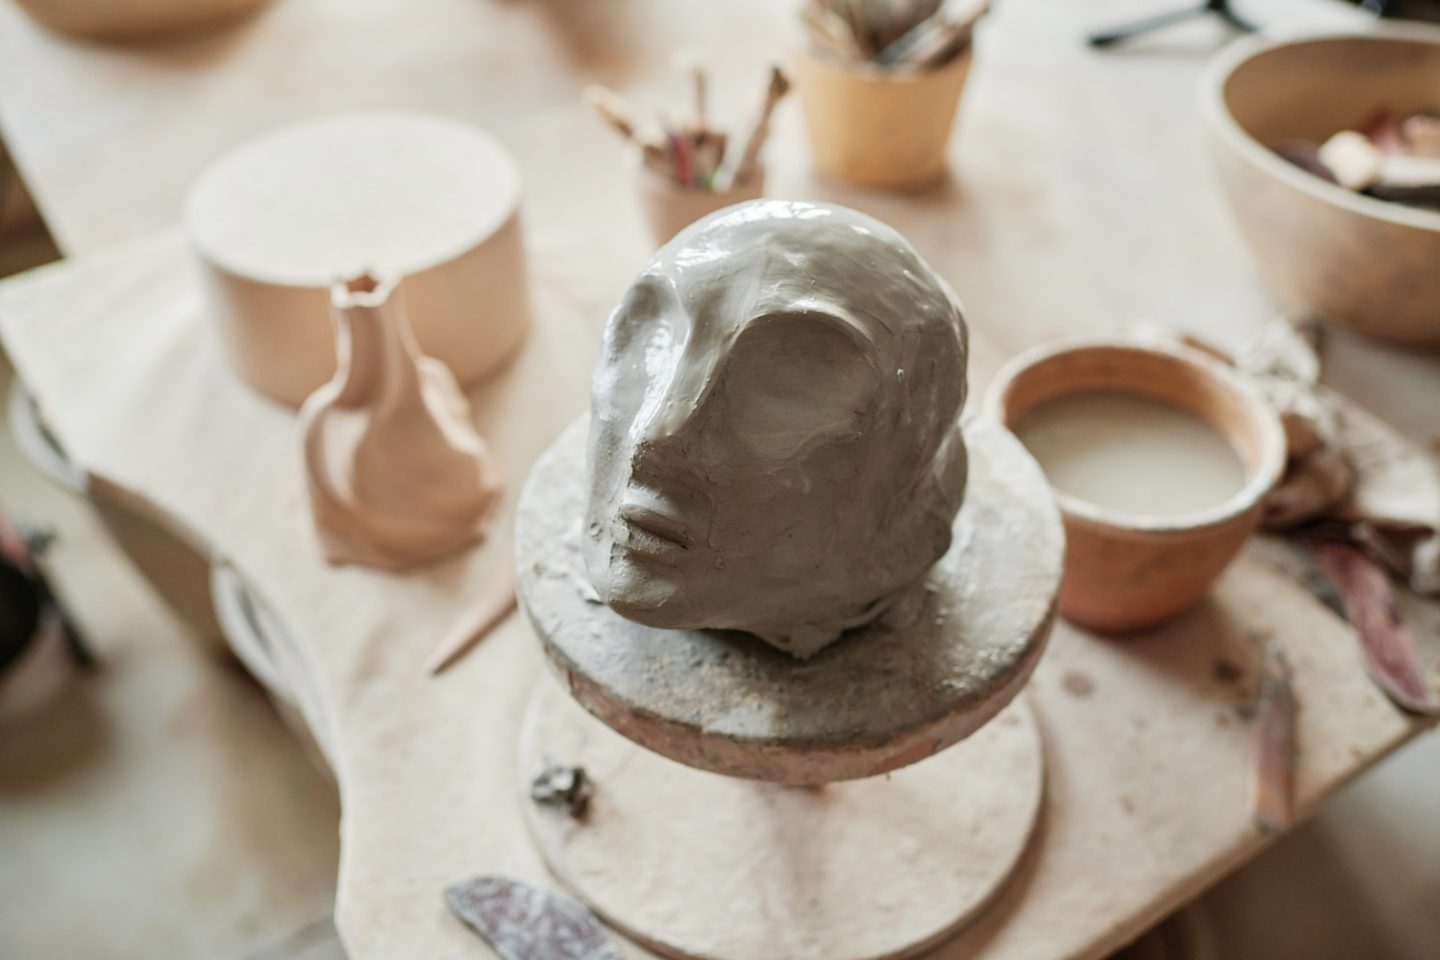 Clay sculpture of human face